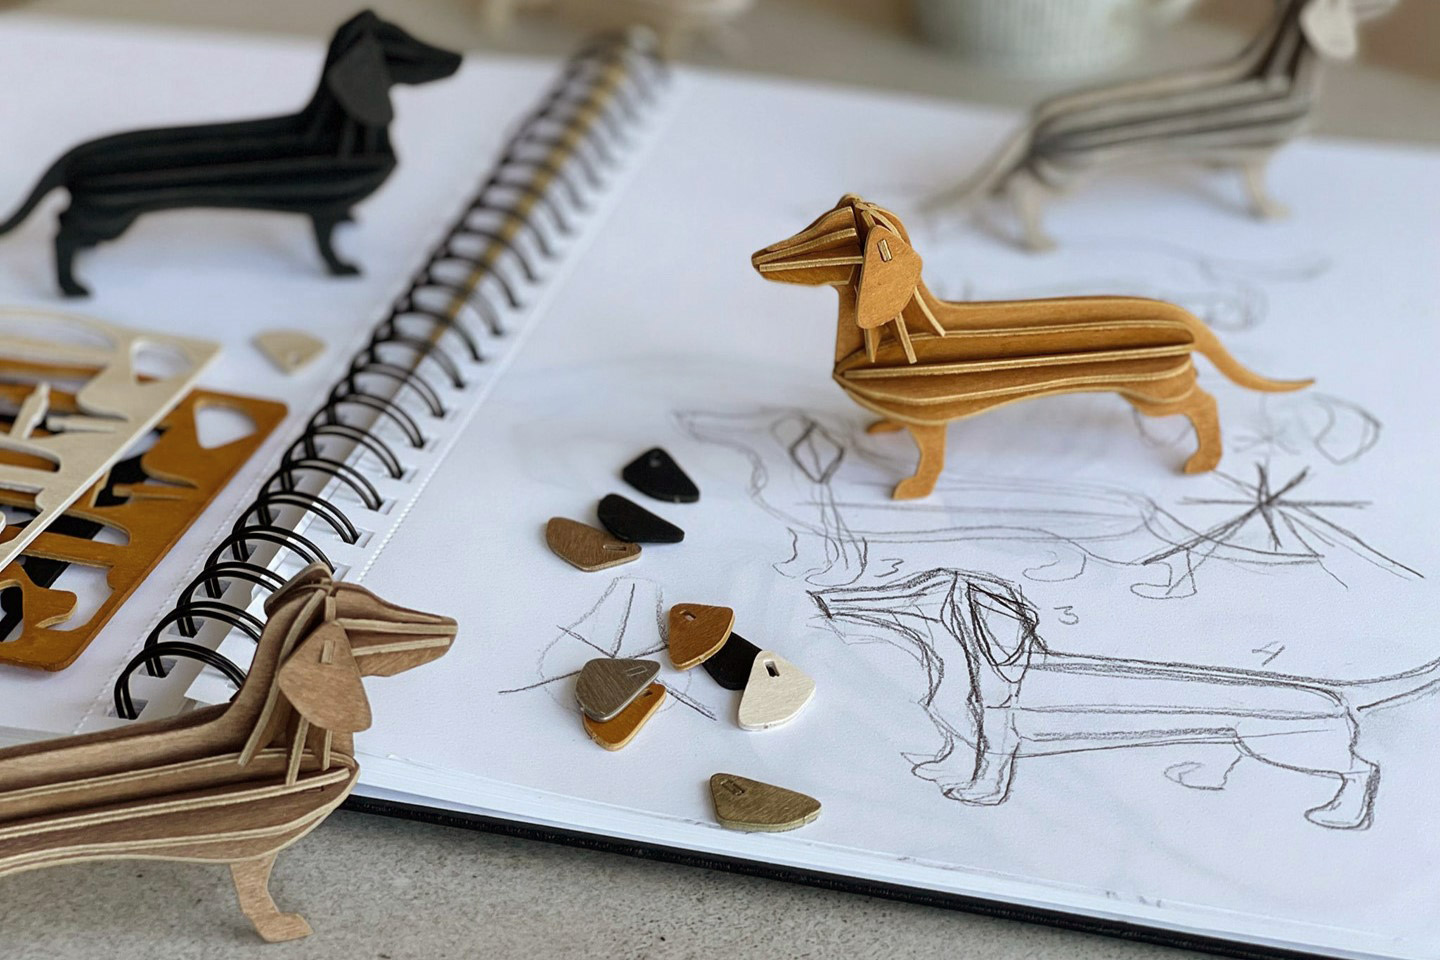 Lovi Dachshunds, wooden dachshund figures, on sketchbook.